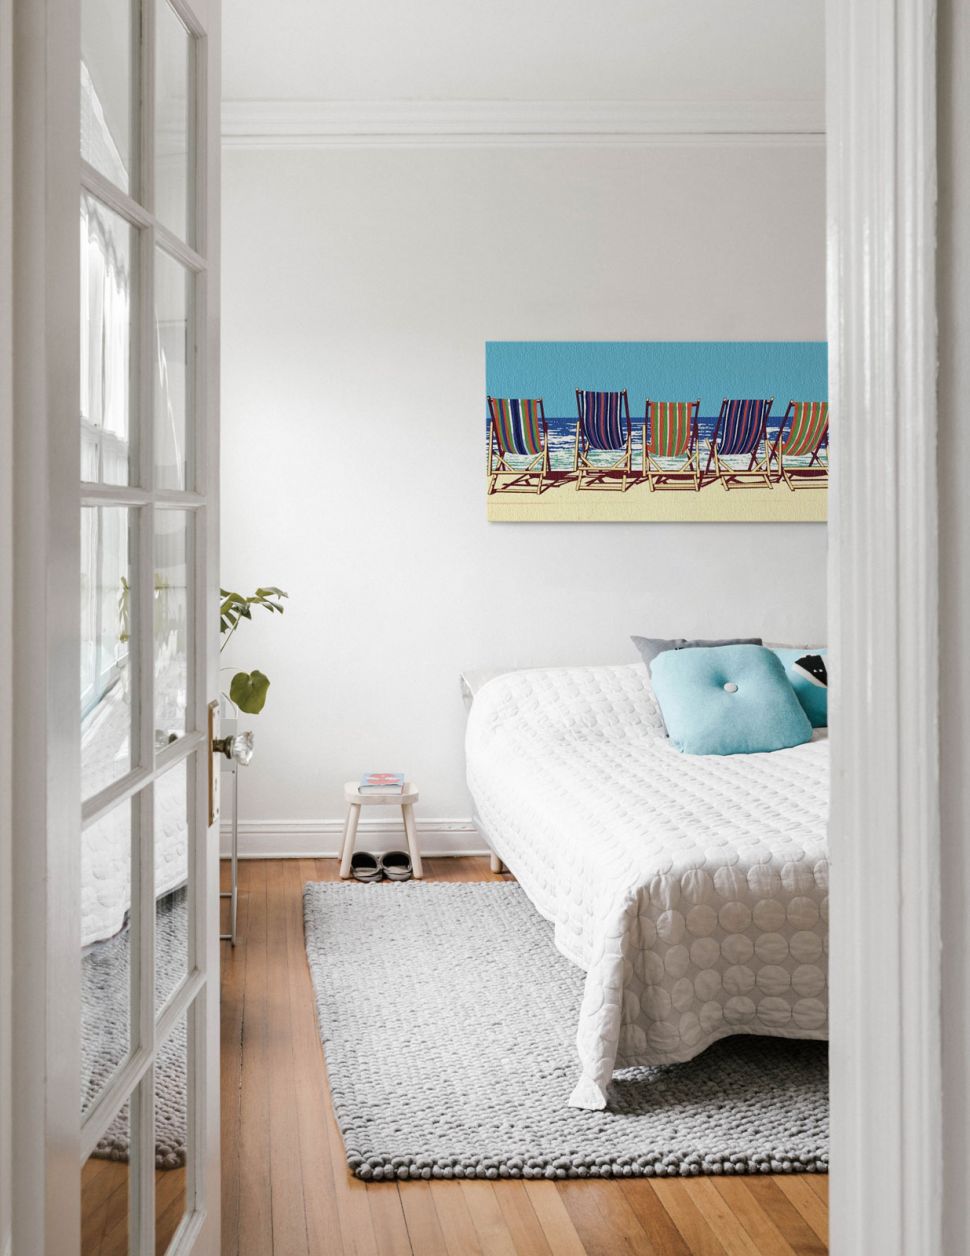 Five Deckchairs - obraz na płótnie do sypialni